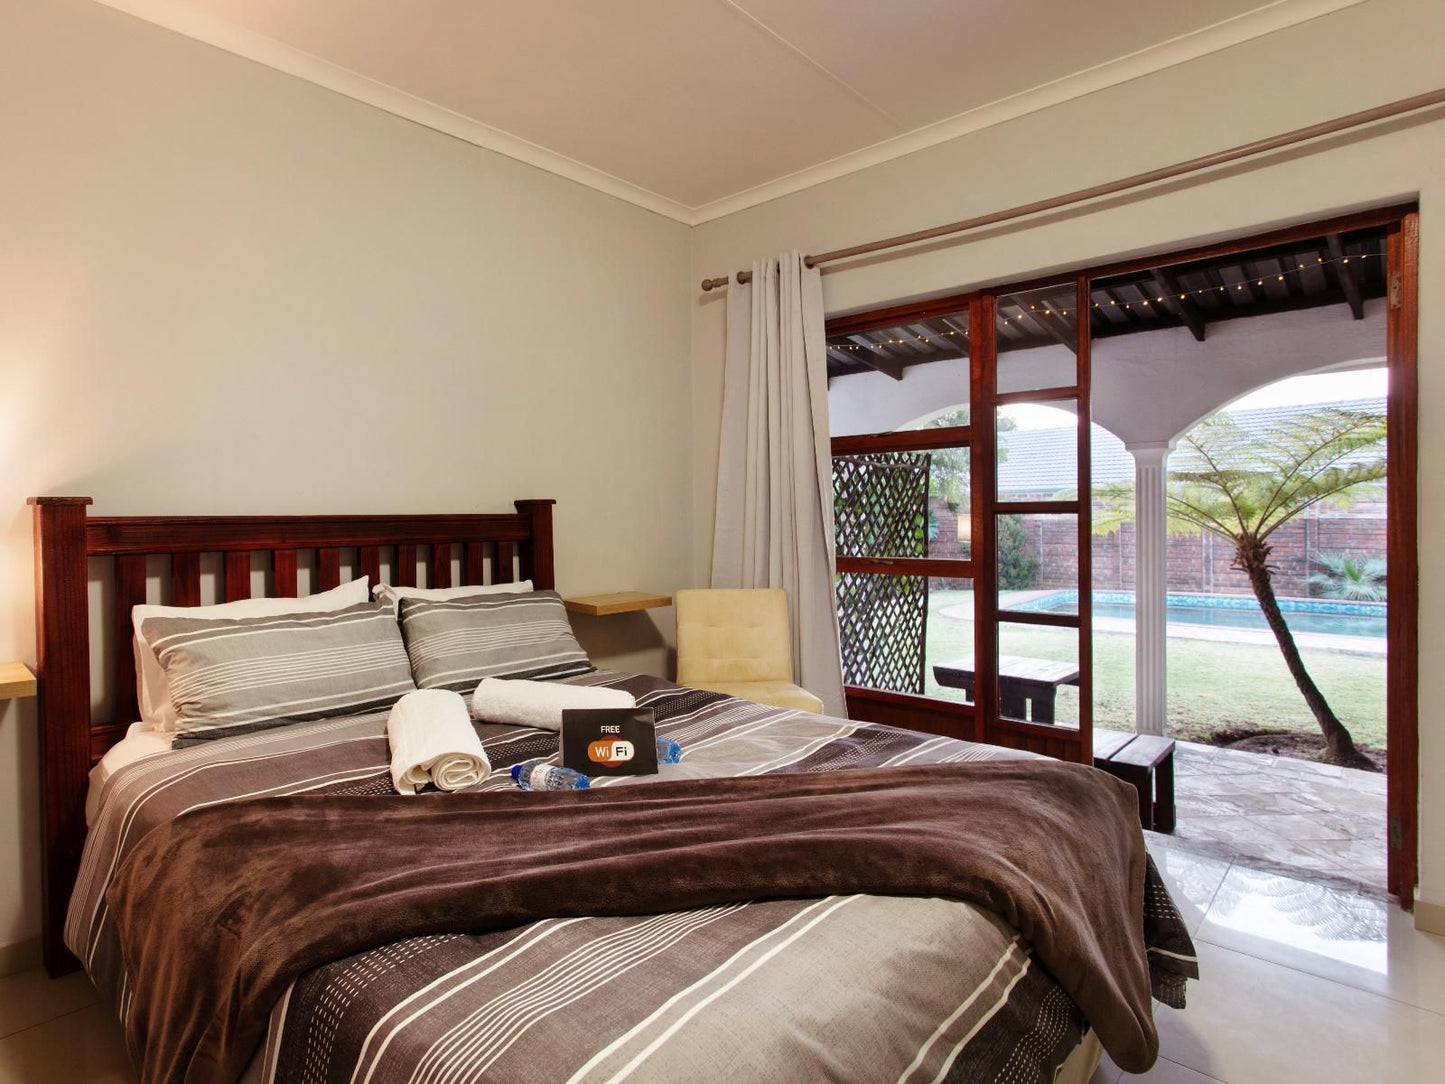 Menlyn Apartments Garsfontein Pretoria Tshwane Gauteng South Africa Bedroom